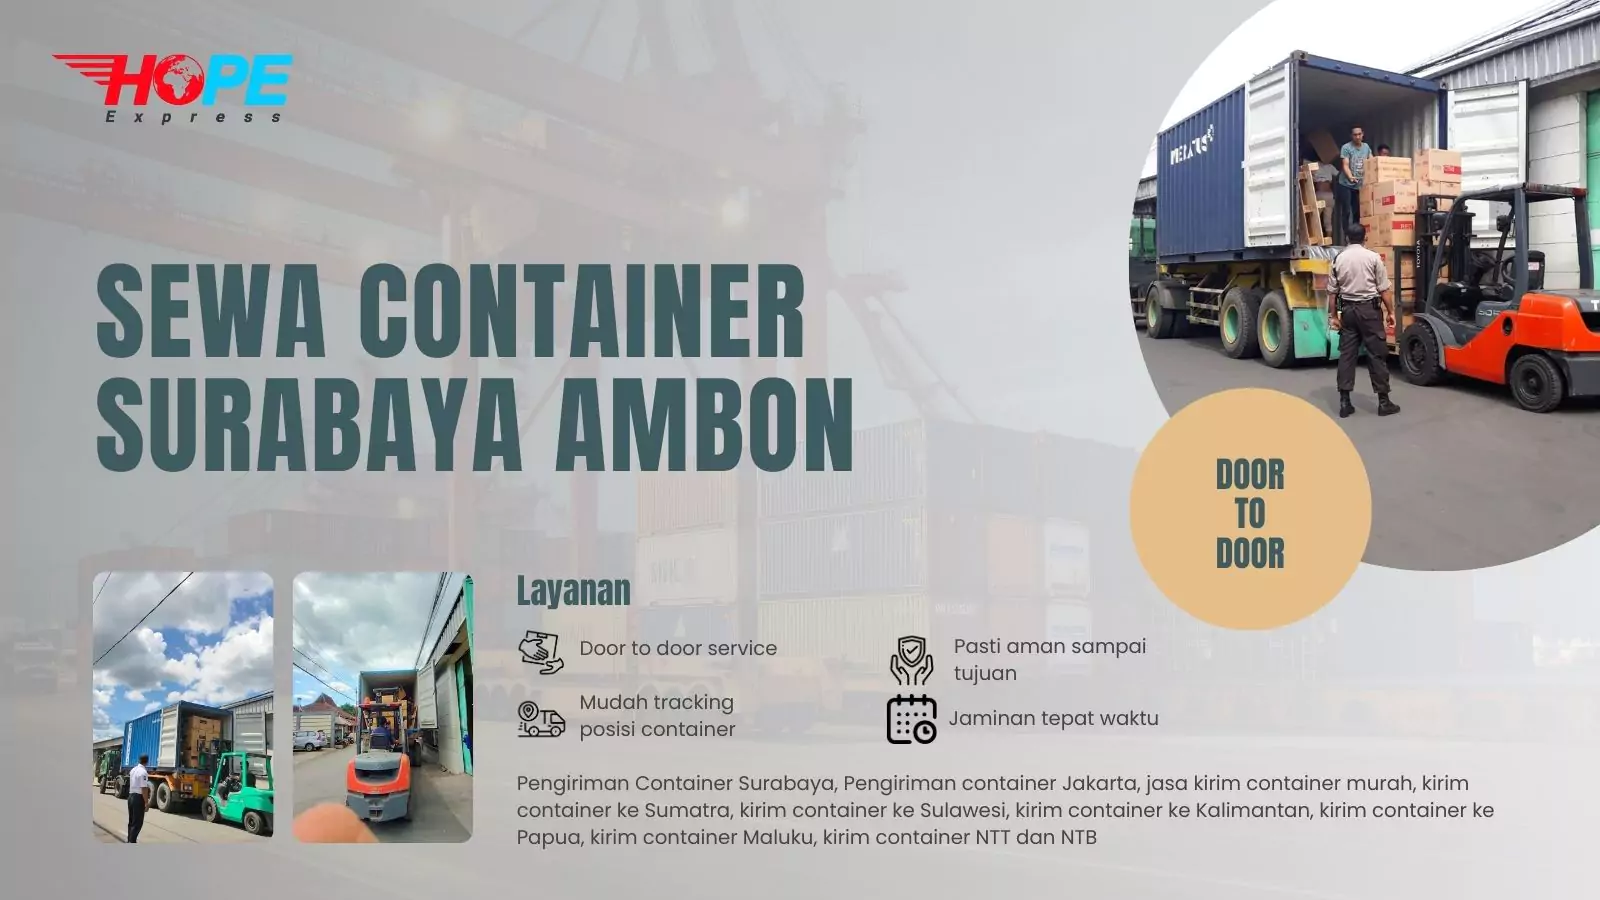 Sewa Container Surabaya Ambon